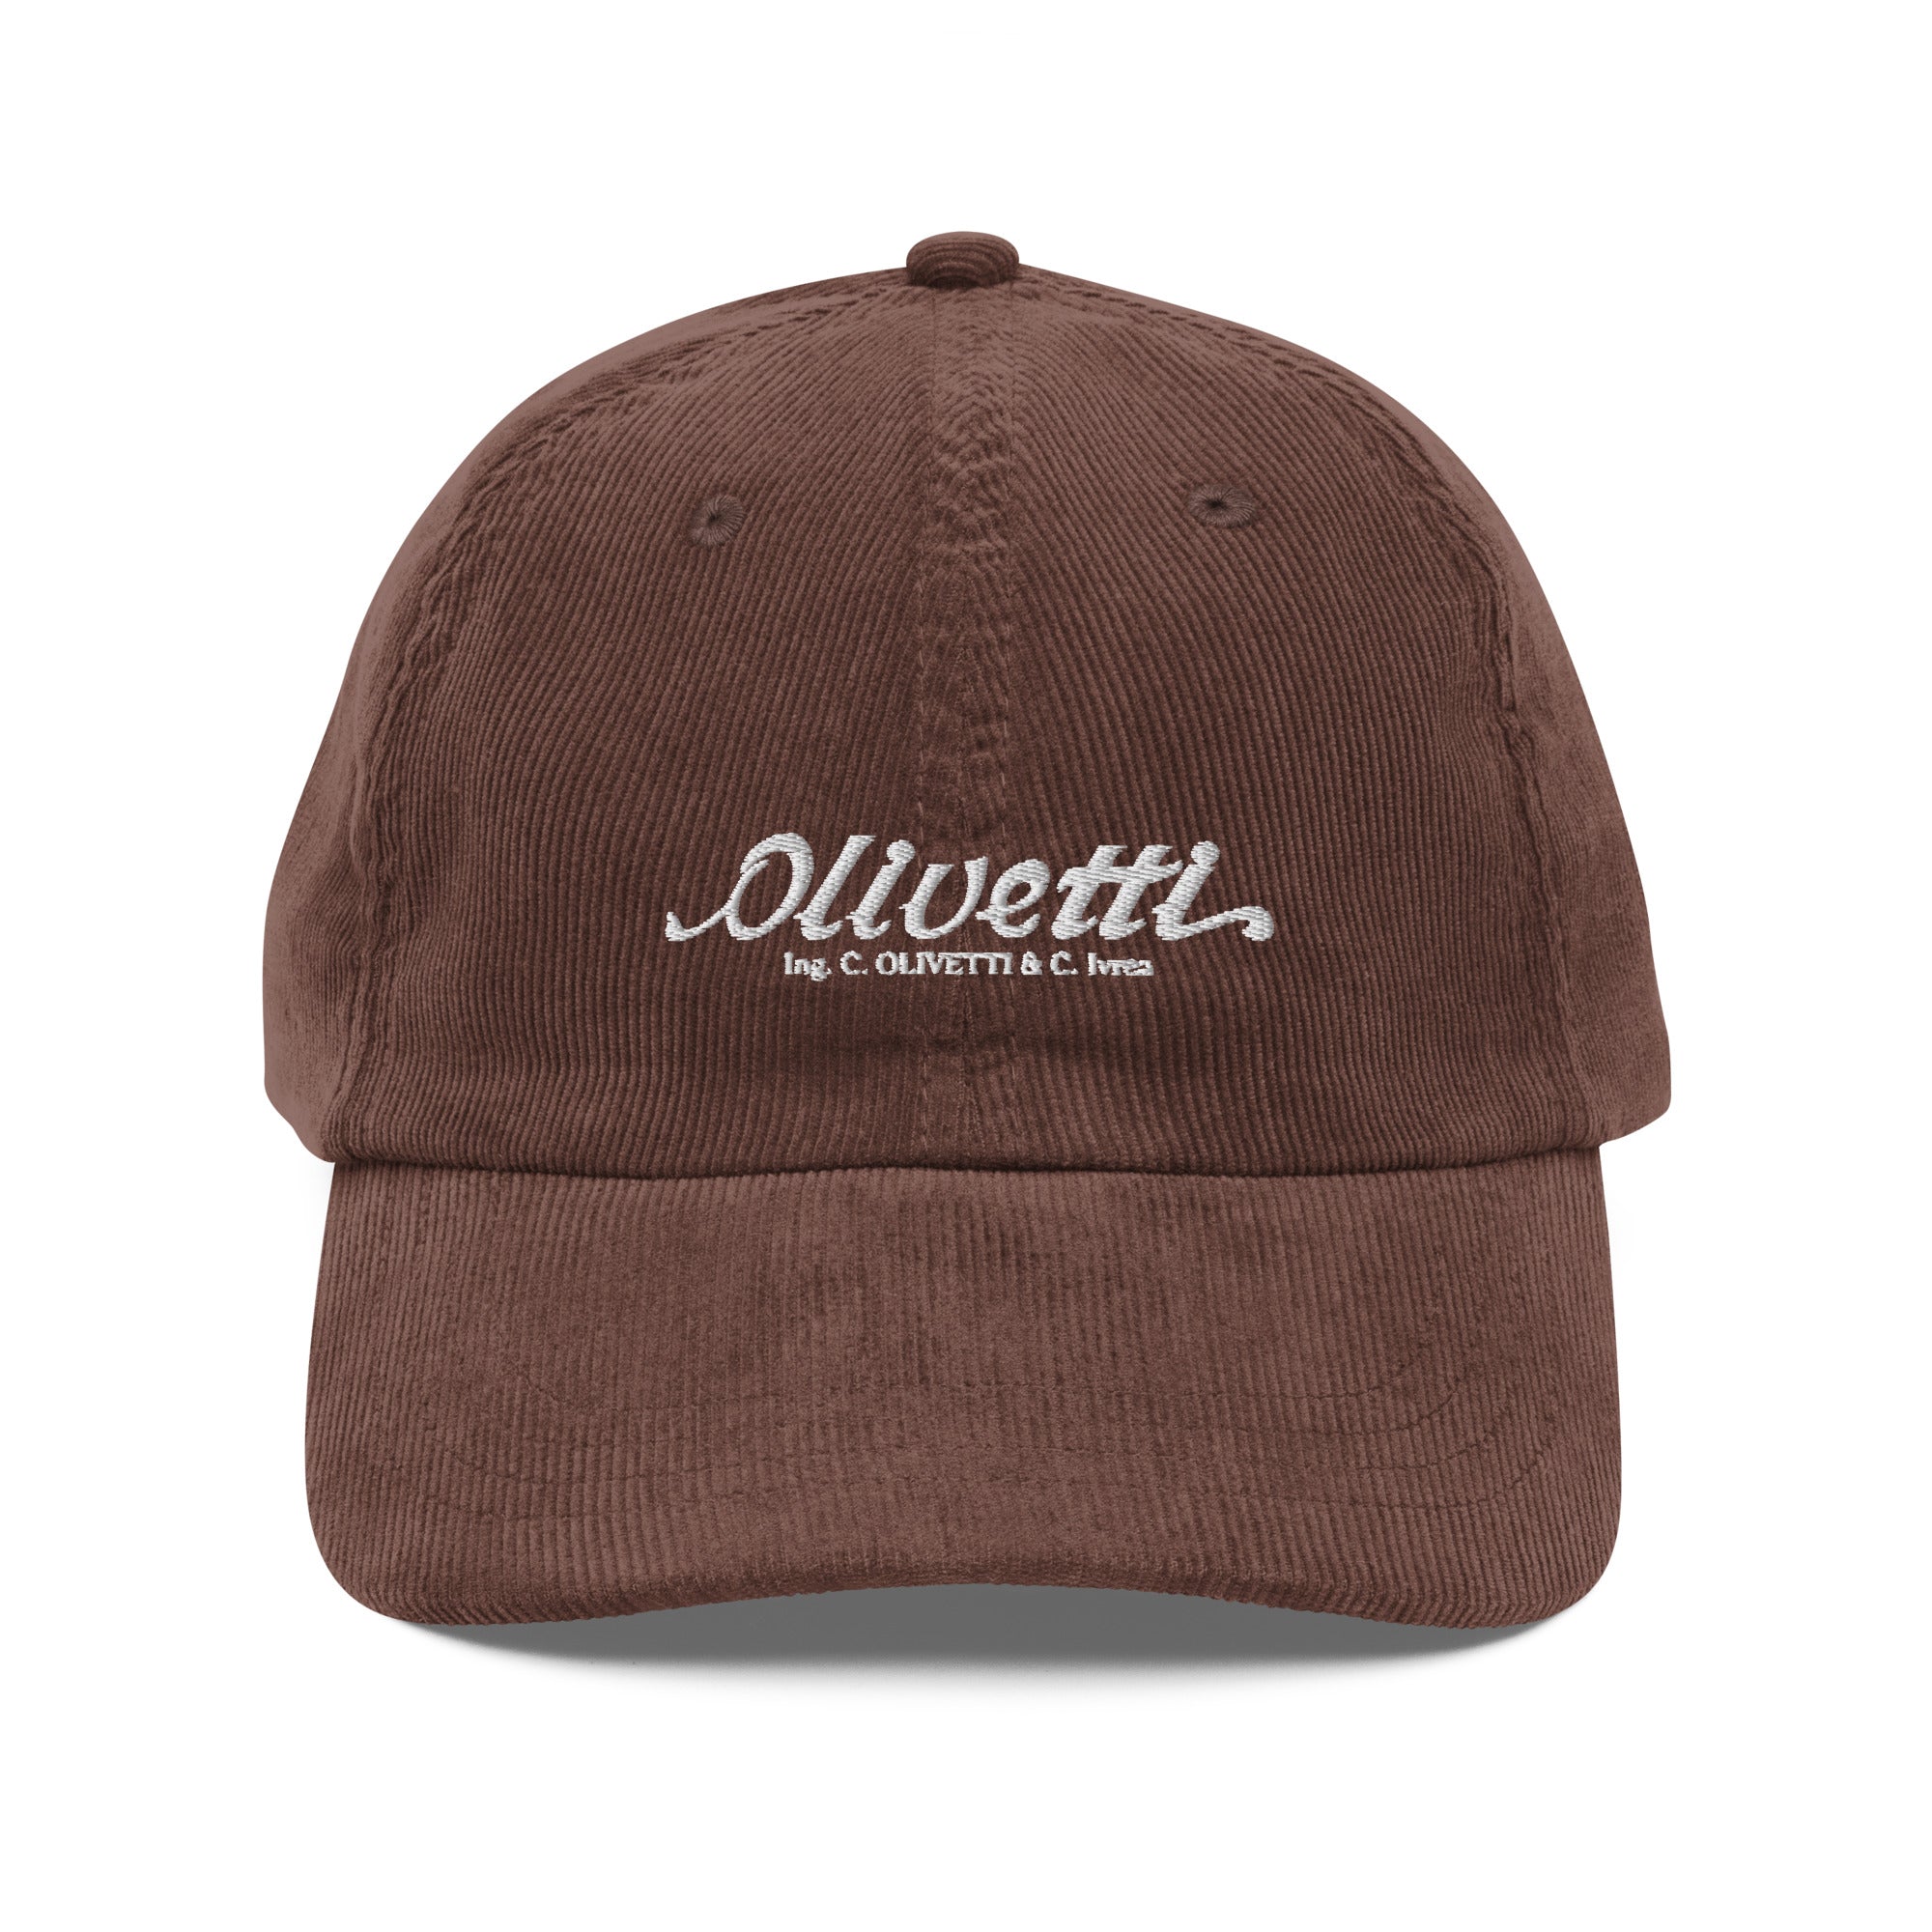 Vintage corduroy cap - Olivetti Ivrea Typewriter Company Hat